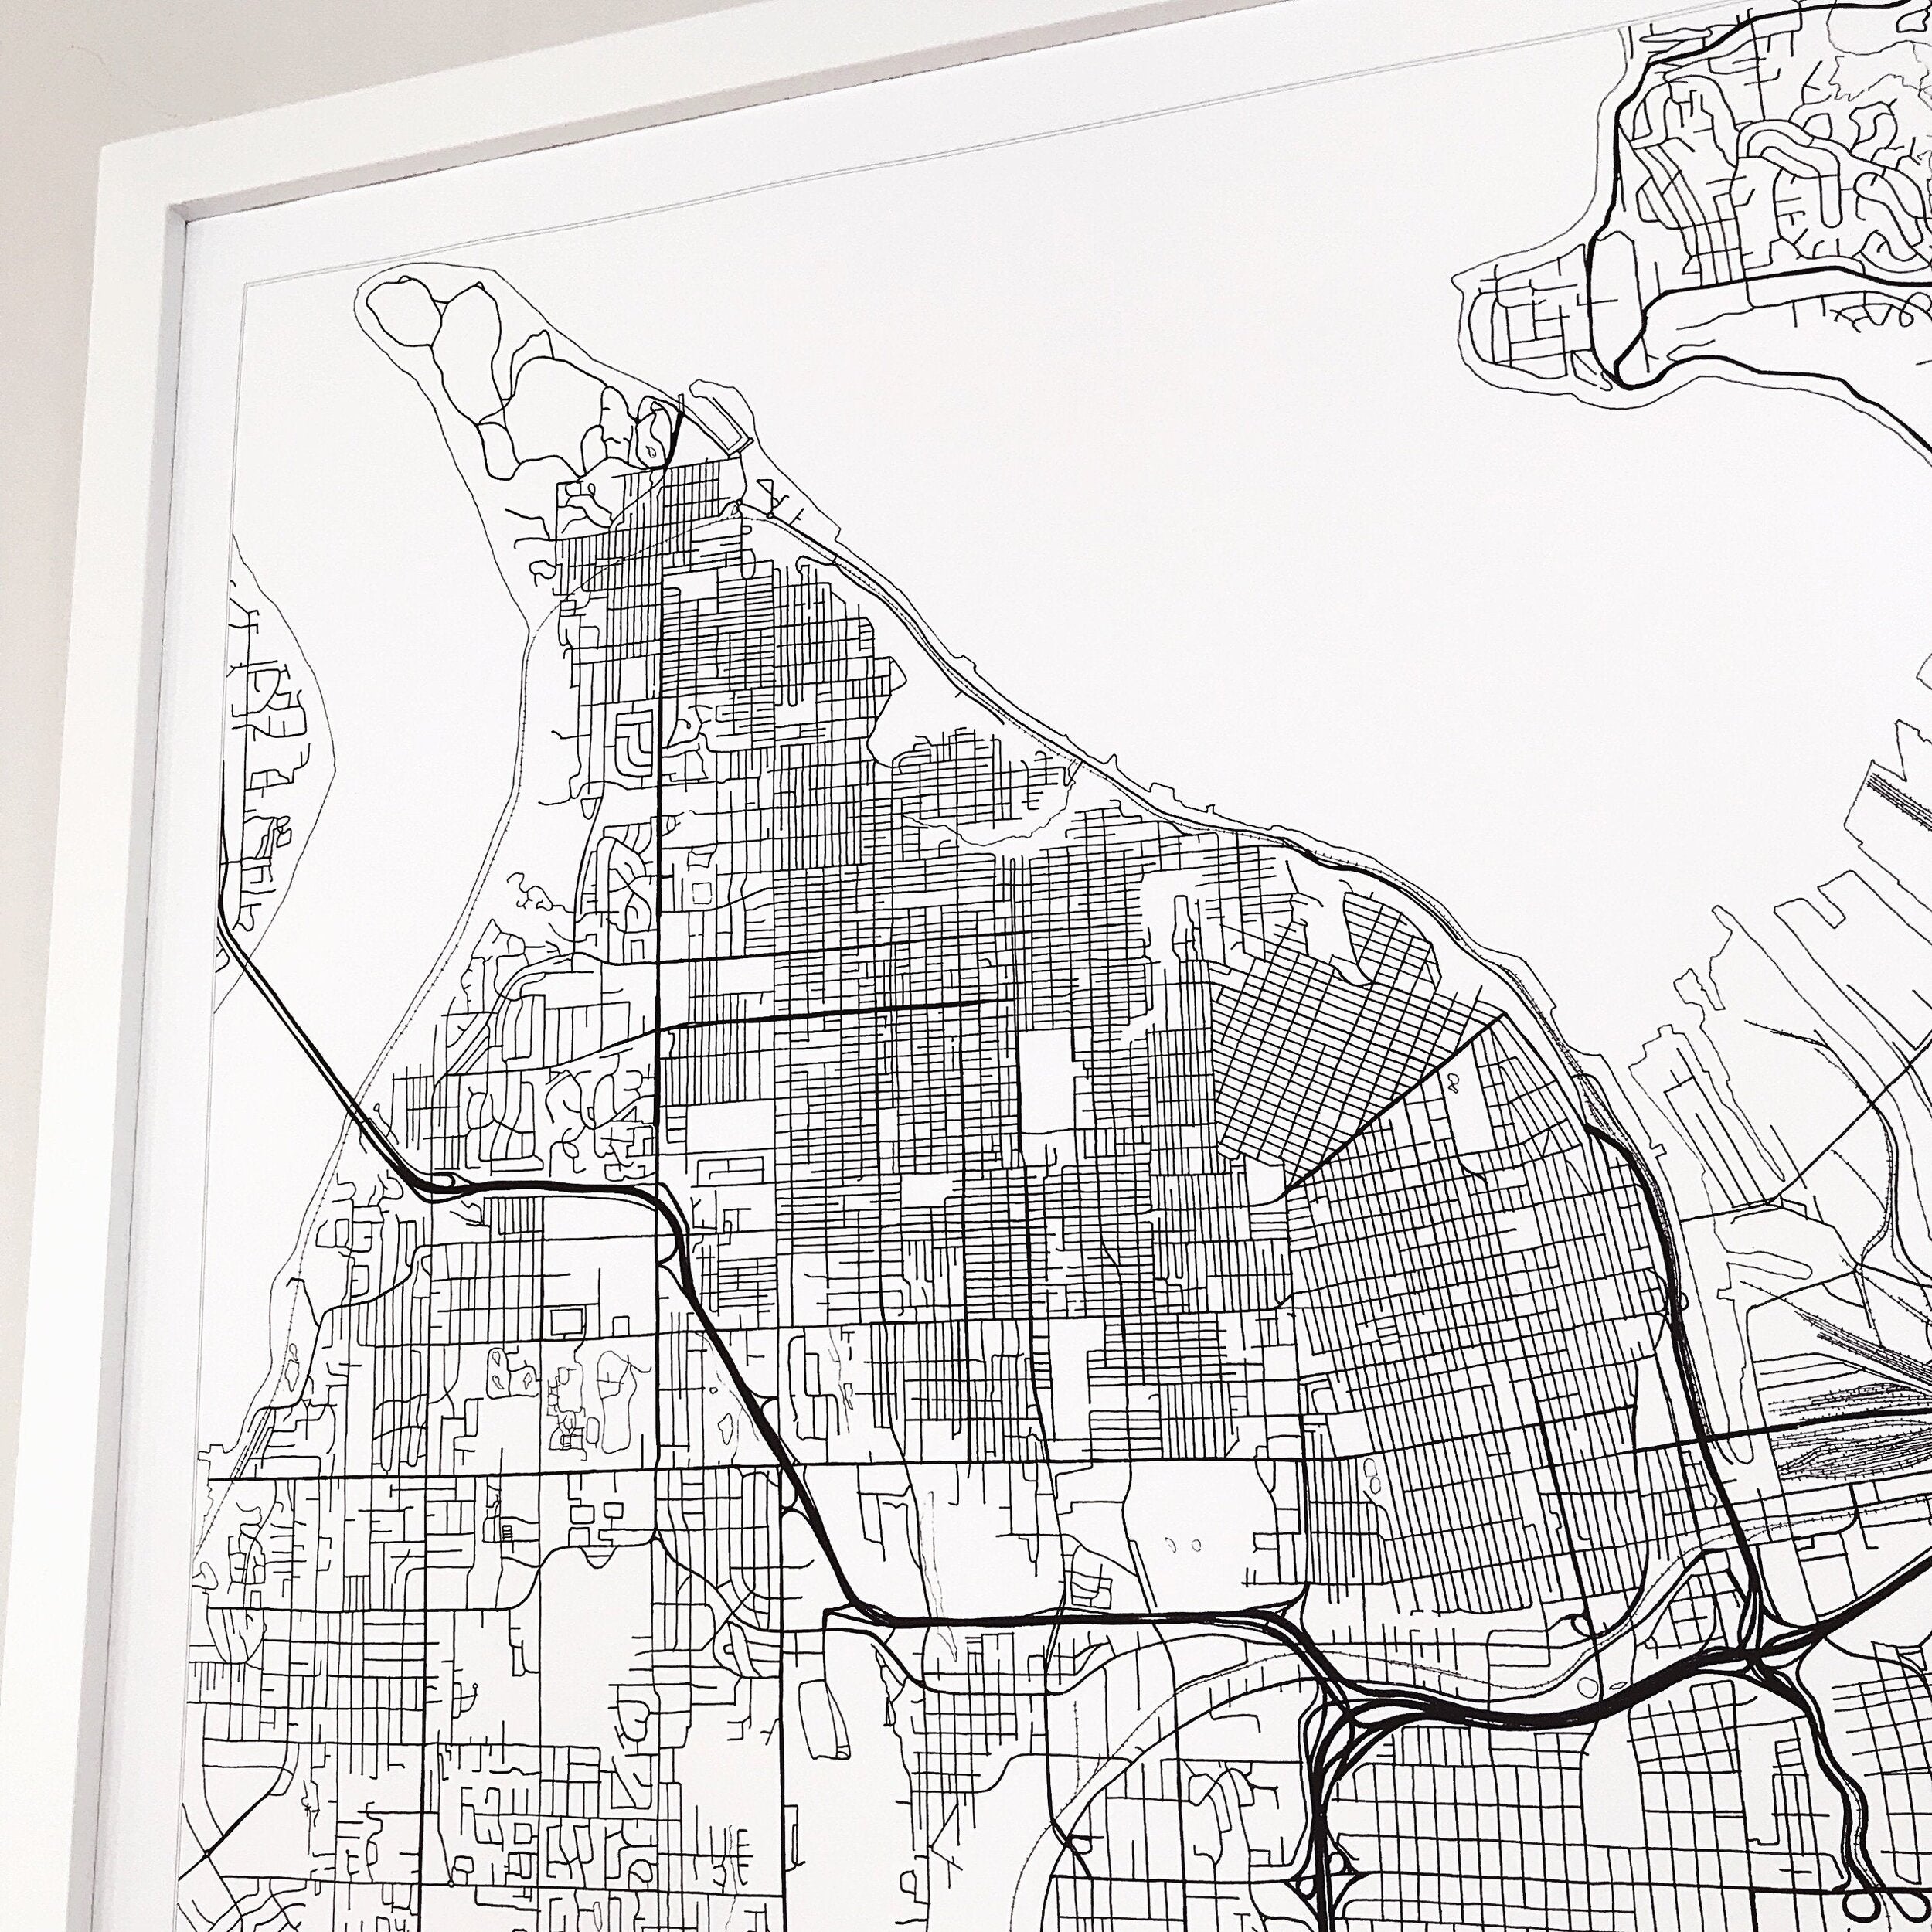 TACOMA City Lines Map: PRINT